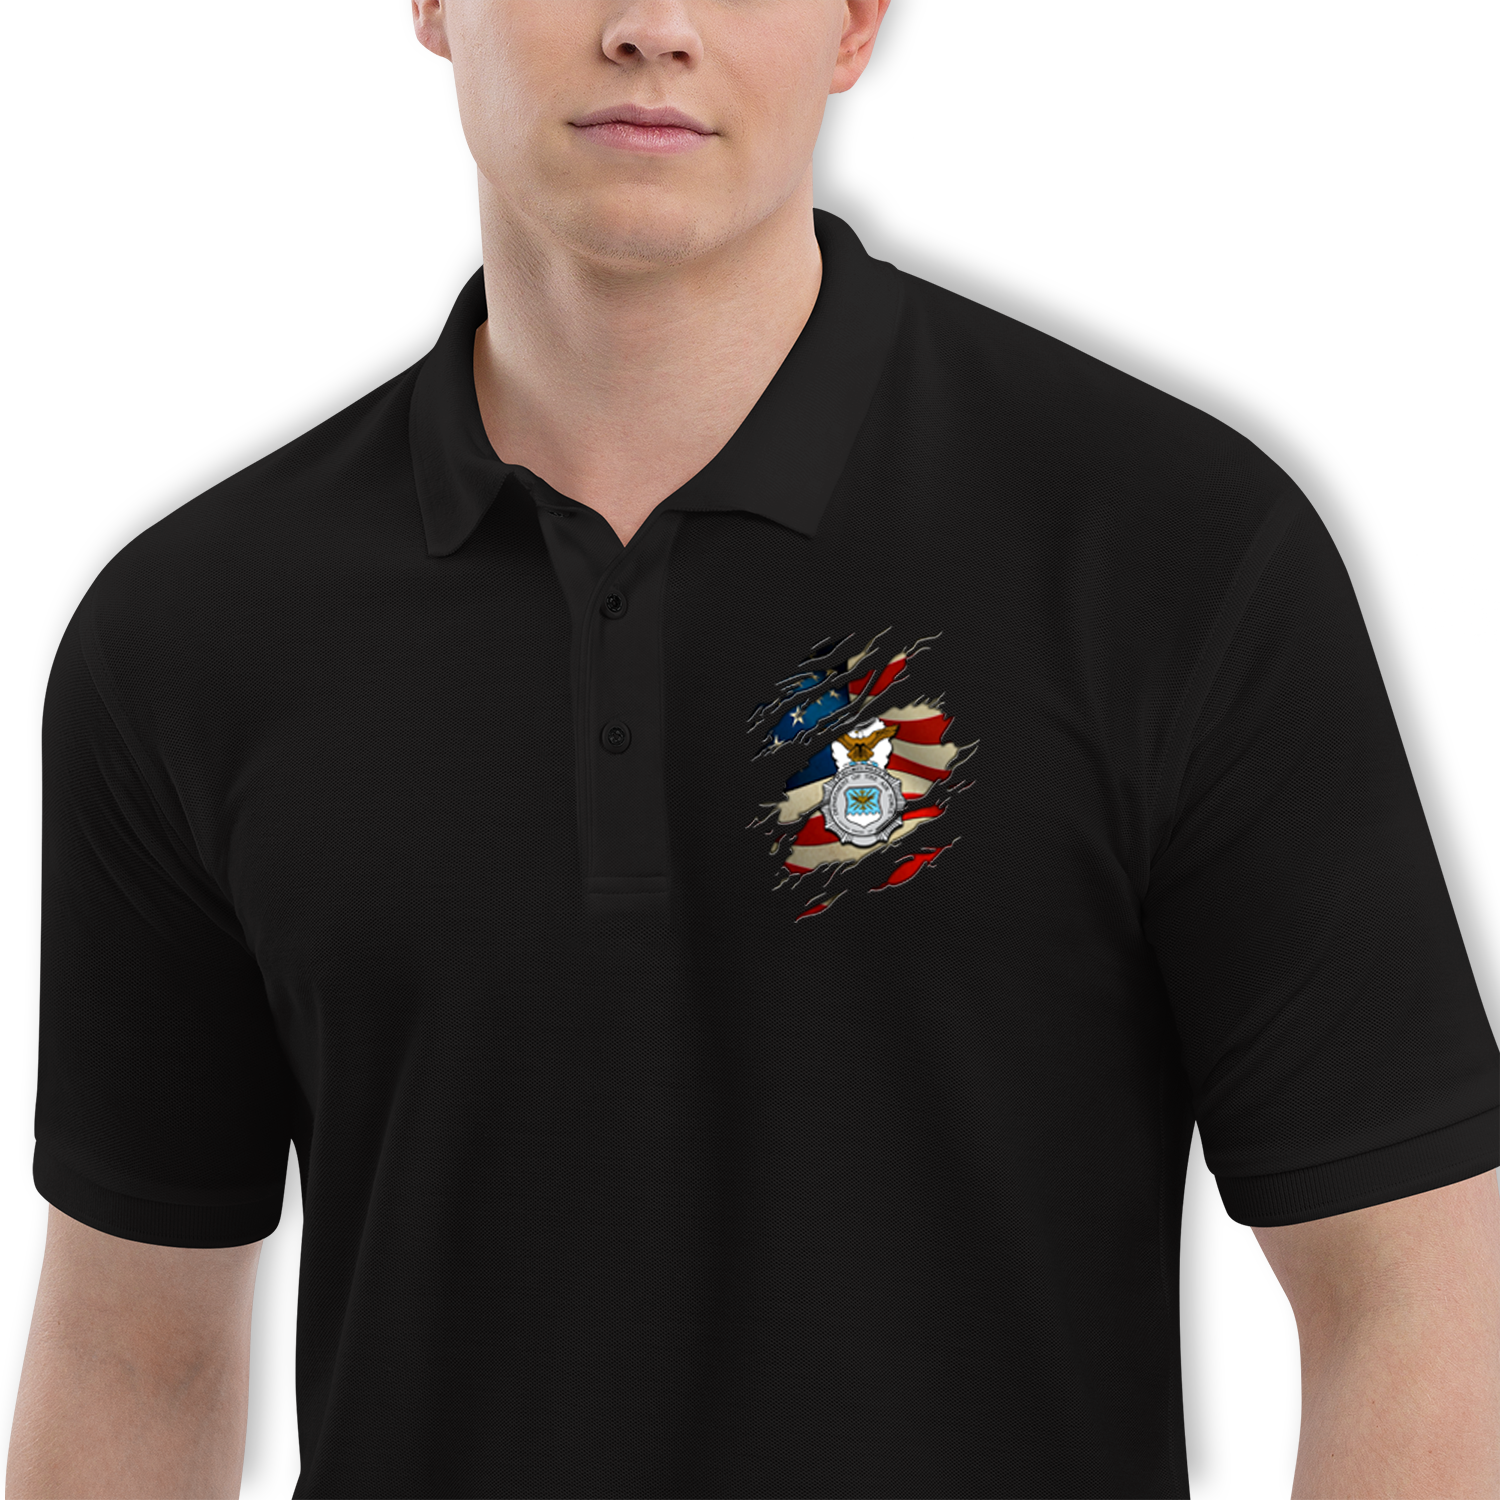 Custom US Air Force Ranks/Insignia, Scratch Art, Print On Left Chest Polo Shirt